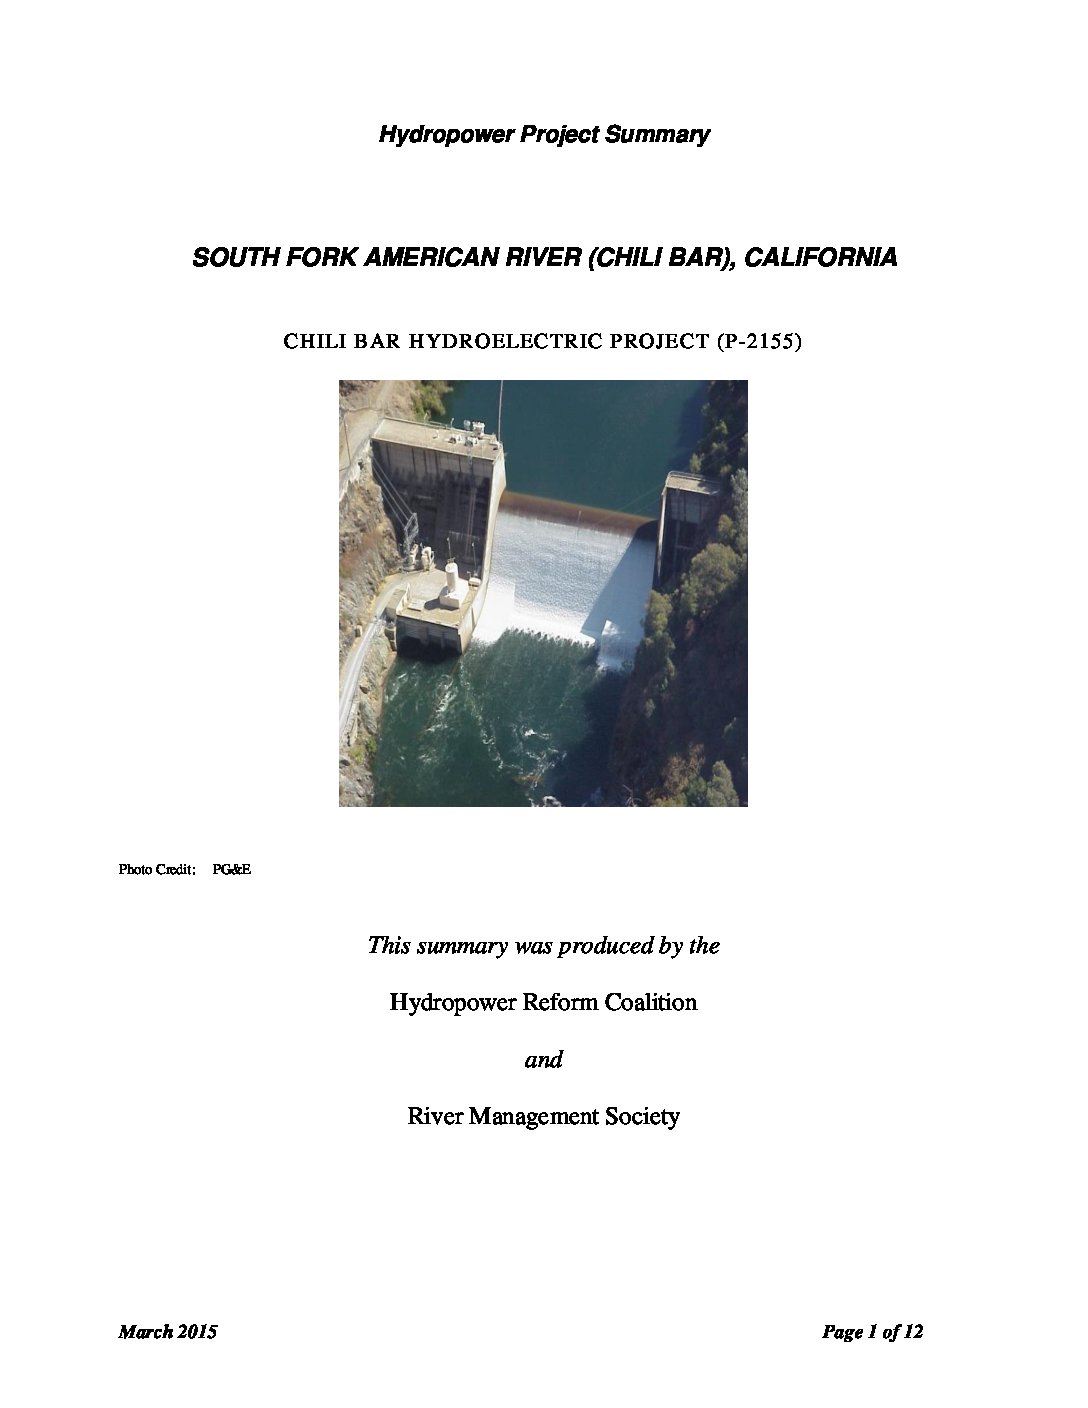 Chili Bar Project, South Fork American River, California